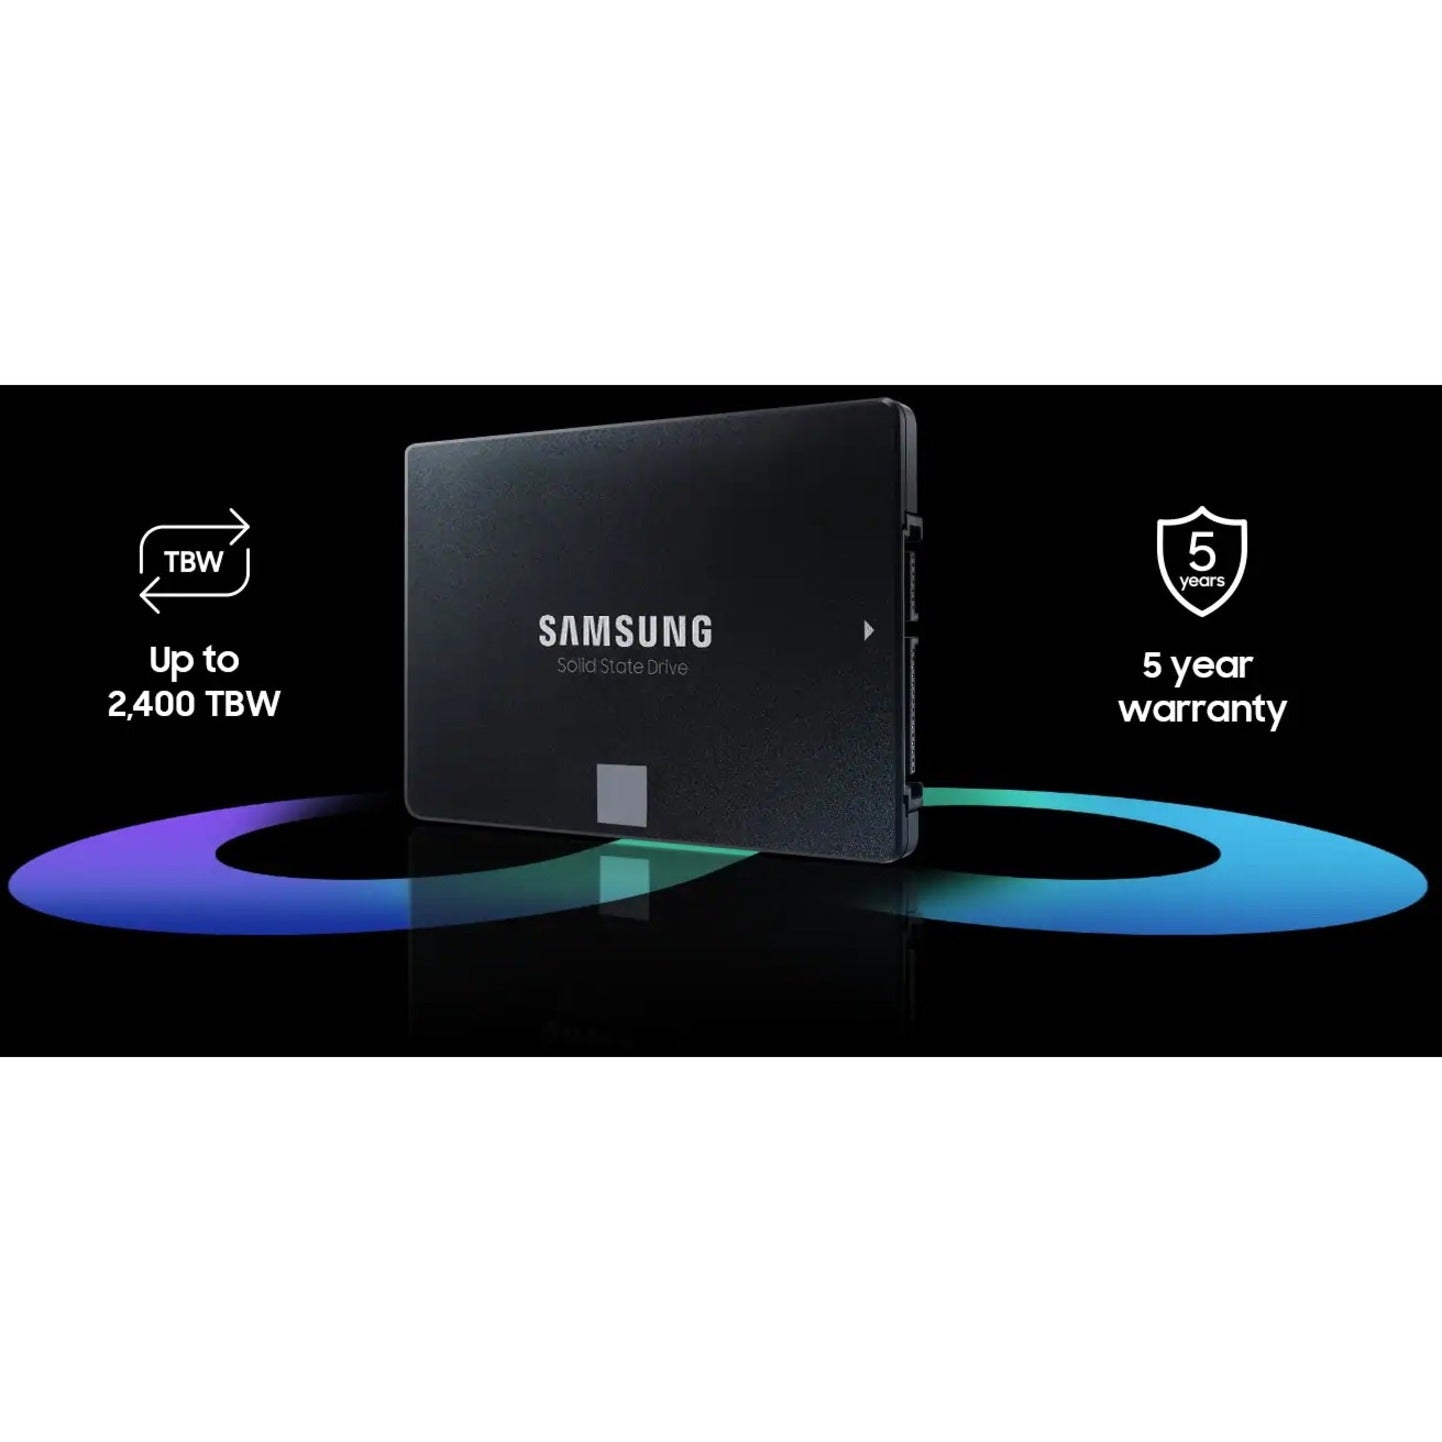 Samsung MZ-77E4T0E 870 EVO 4TB 2.5 SATA 6Gbps Solid State Drive 5 Year Warranty 560 MB/s Read 530 MB/s Write